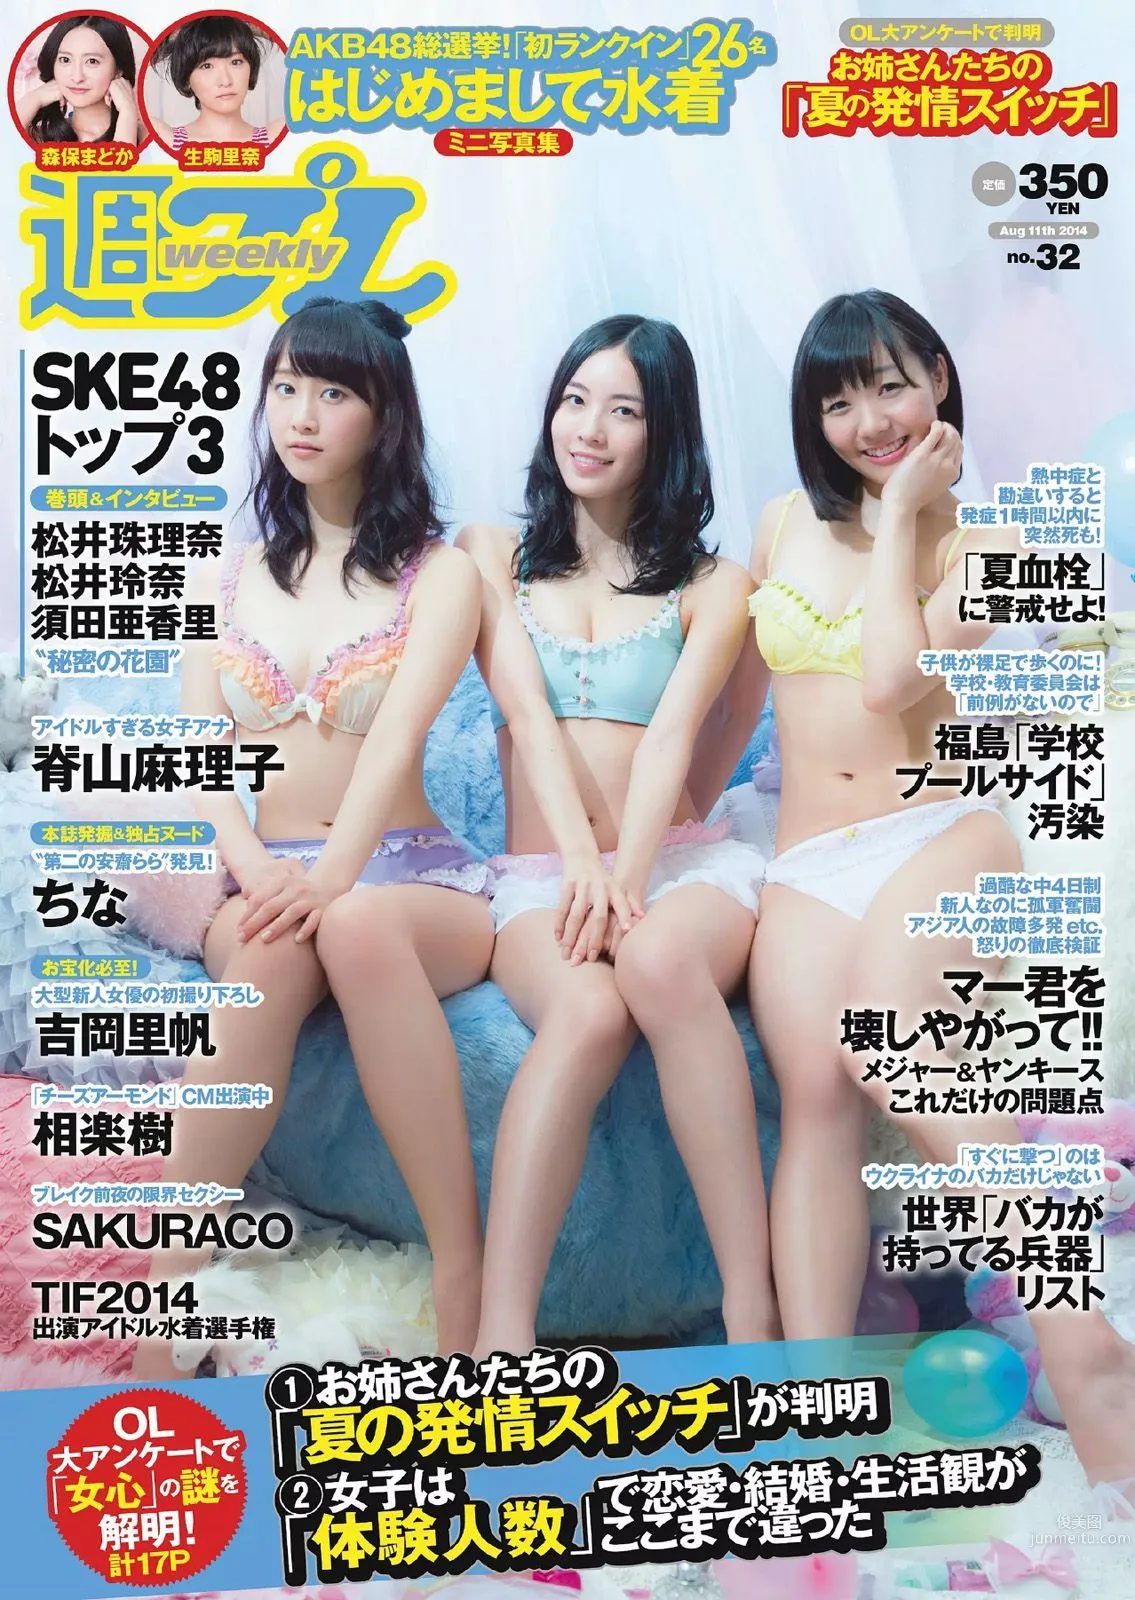 SKE48 相楽樹 吉岡里帆 脊山麻理子 SAKURACO 橘花凛 [Weekly Playboy] 2014年No.32 写真杂志1